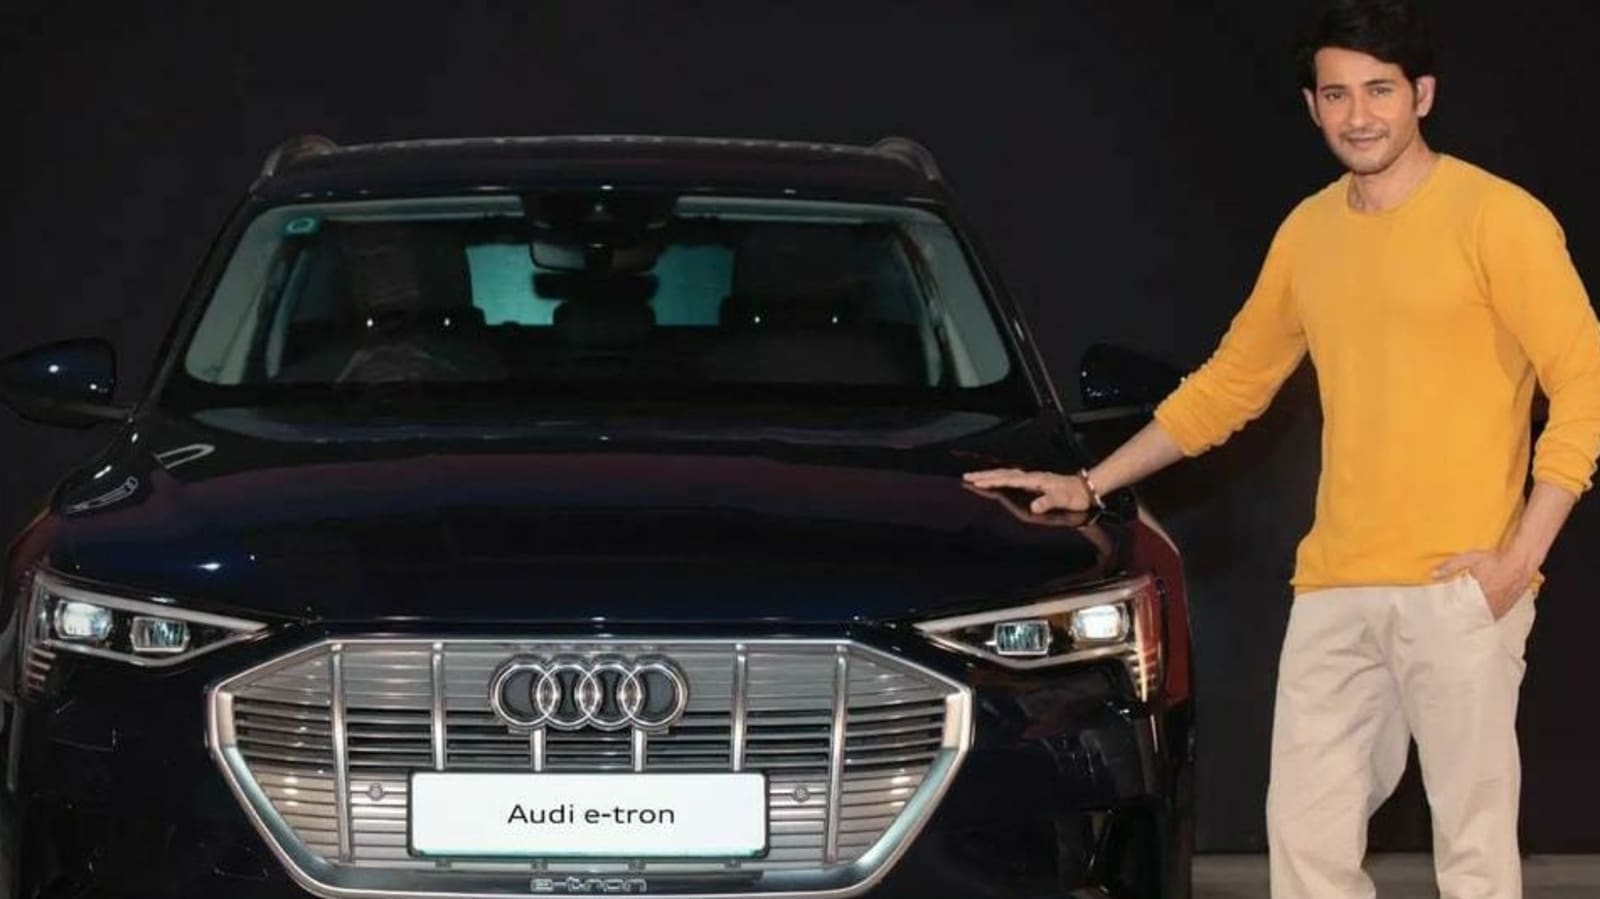 Mahesh Babu brings home Audi electric car worth ₹1.19 crore ...